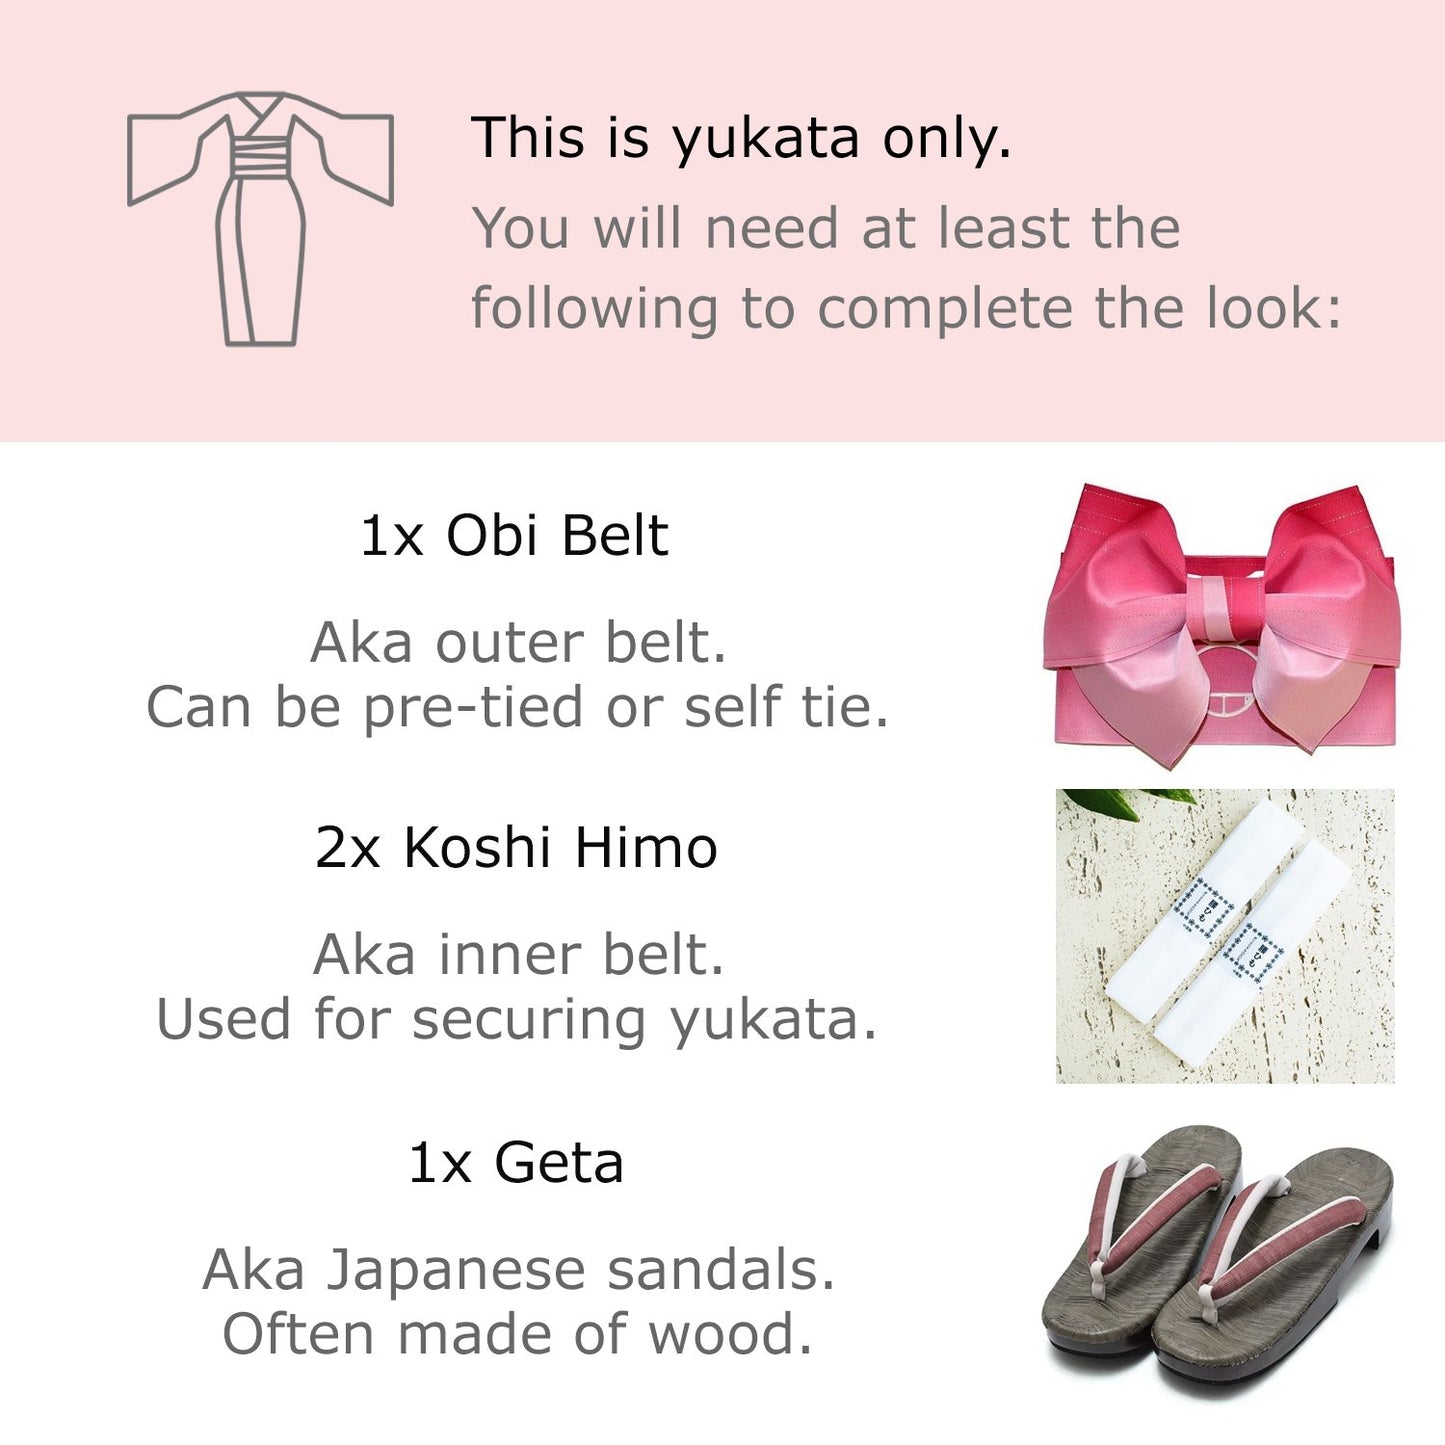 Yukata Kimono Petite Size - Peonies and Butterflies in Black (Style #2557) ( Discontinued )